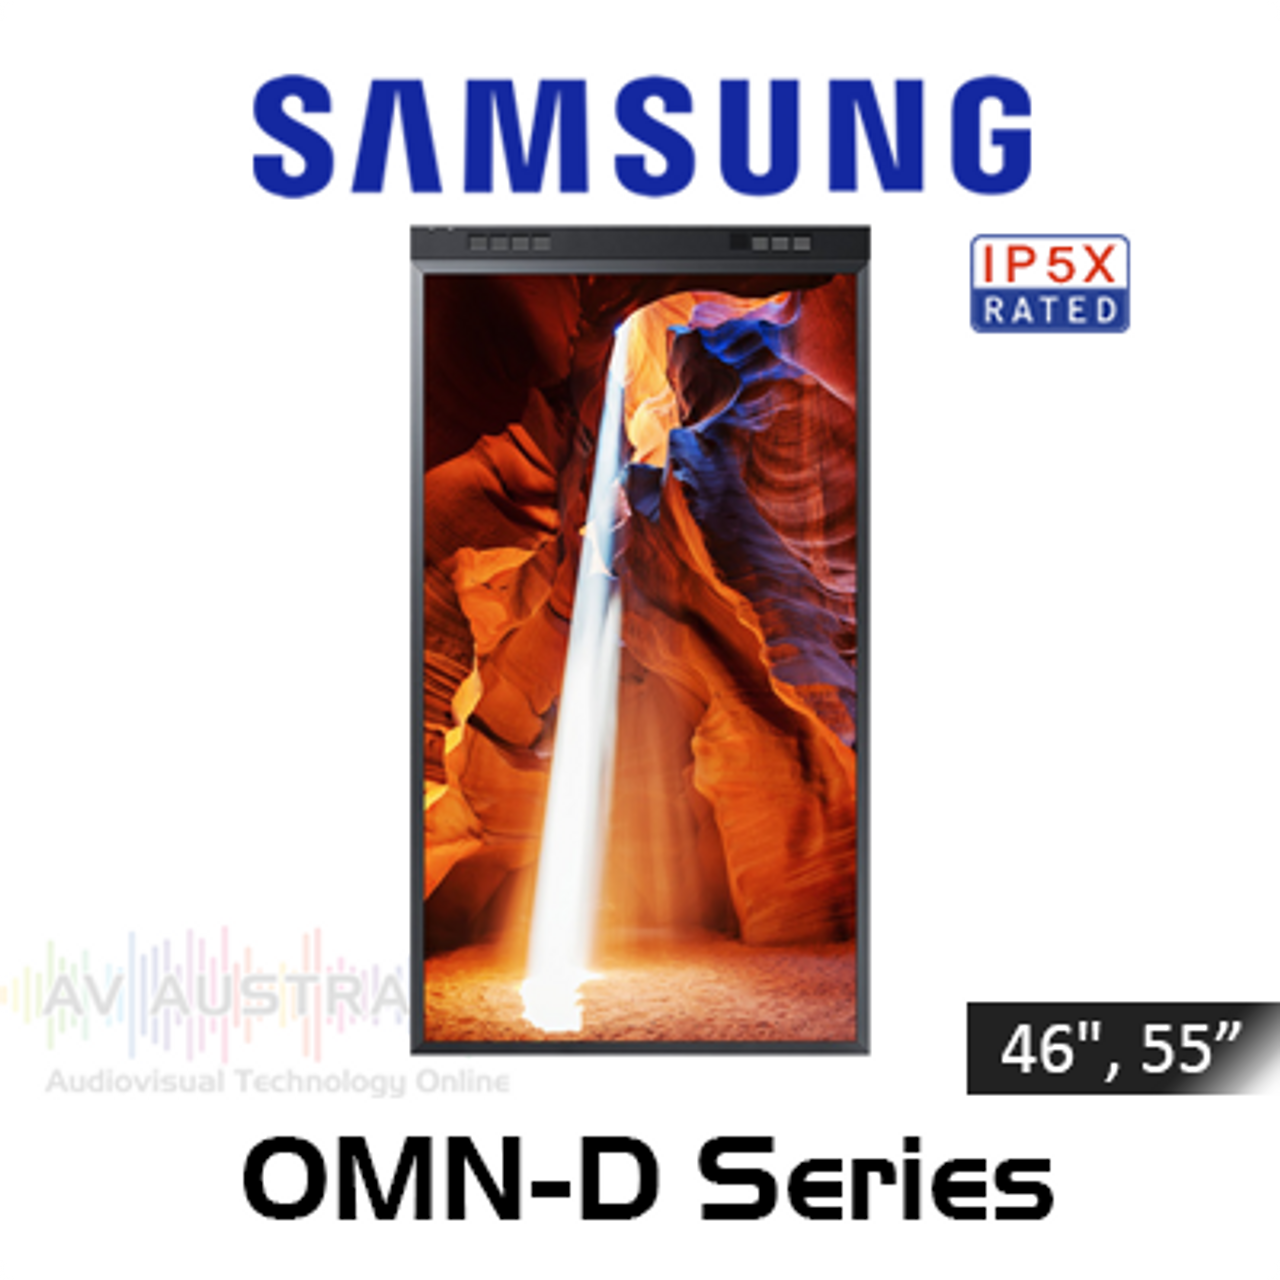 Samsung OMN-D Full HD Dual Sided Super High Brightness Tizen Powered 24/7 Smart Signage (46", 55")